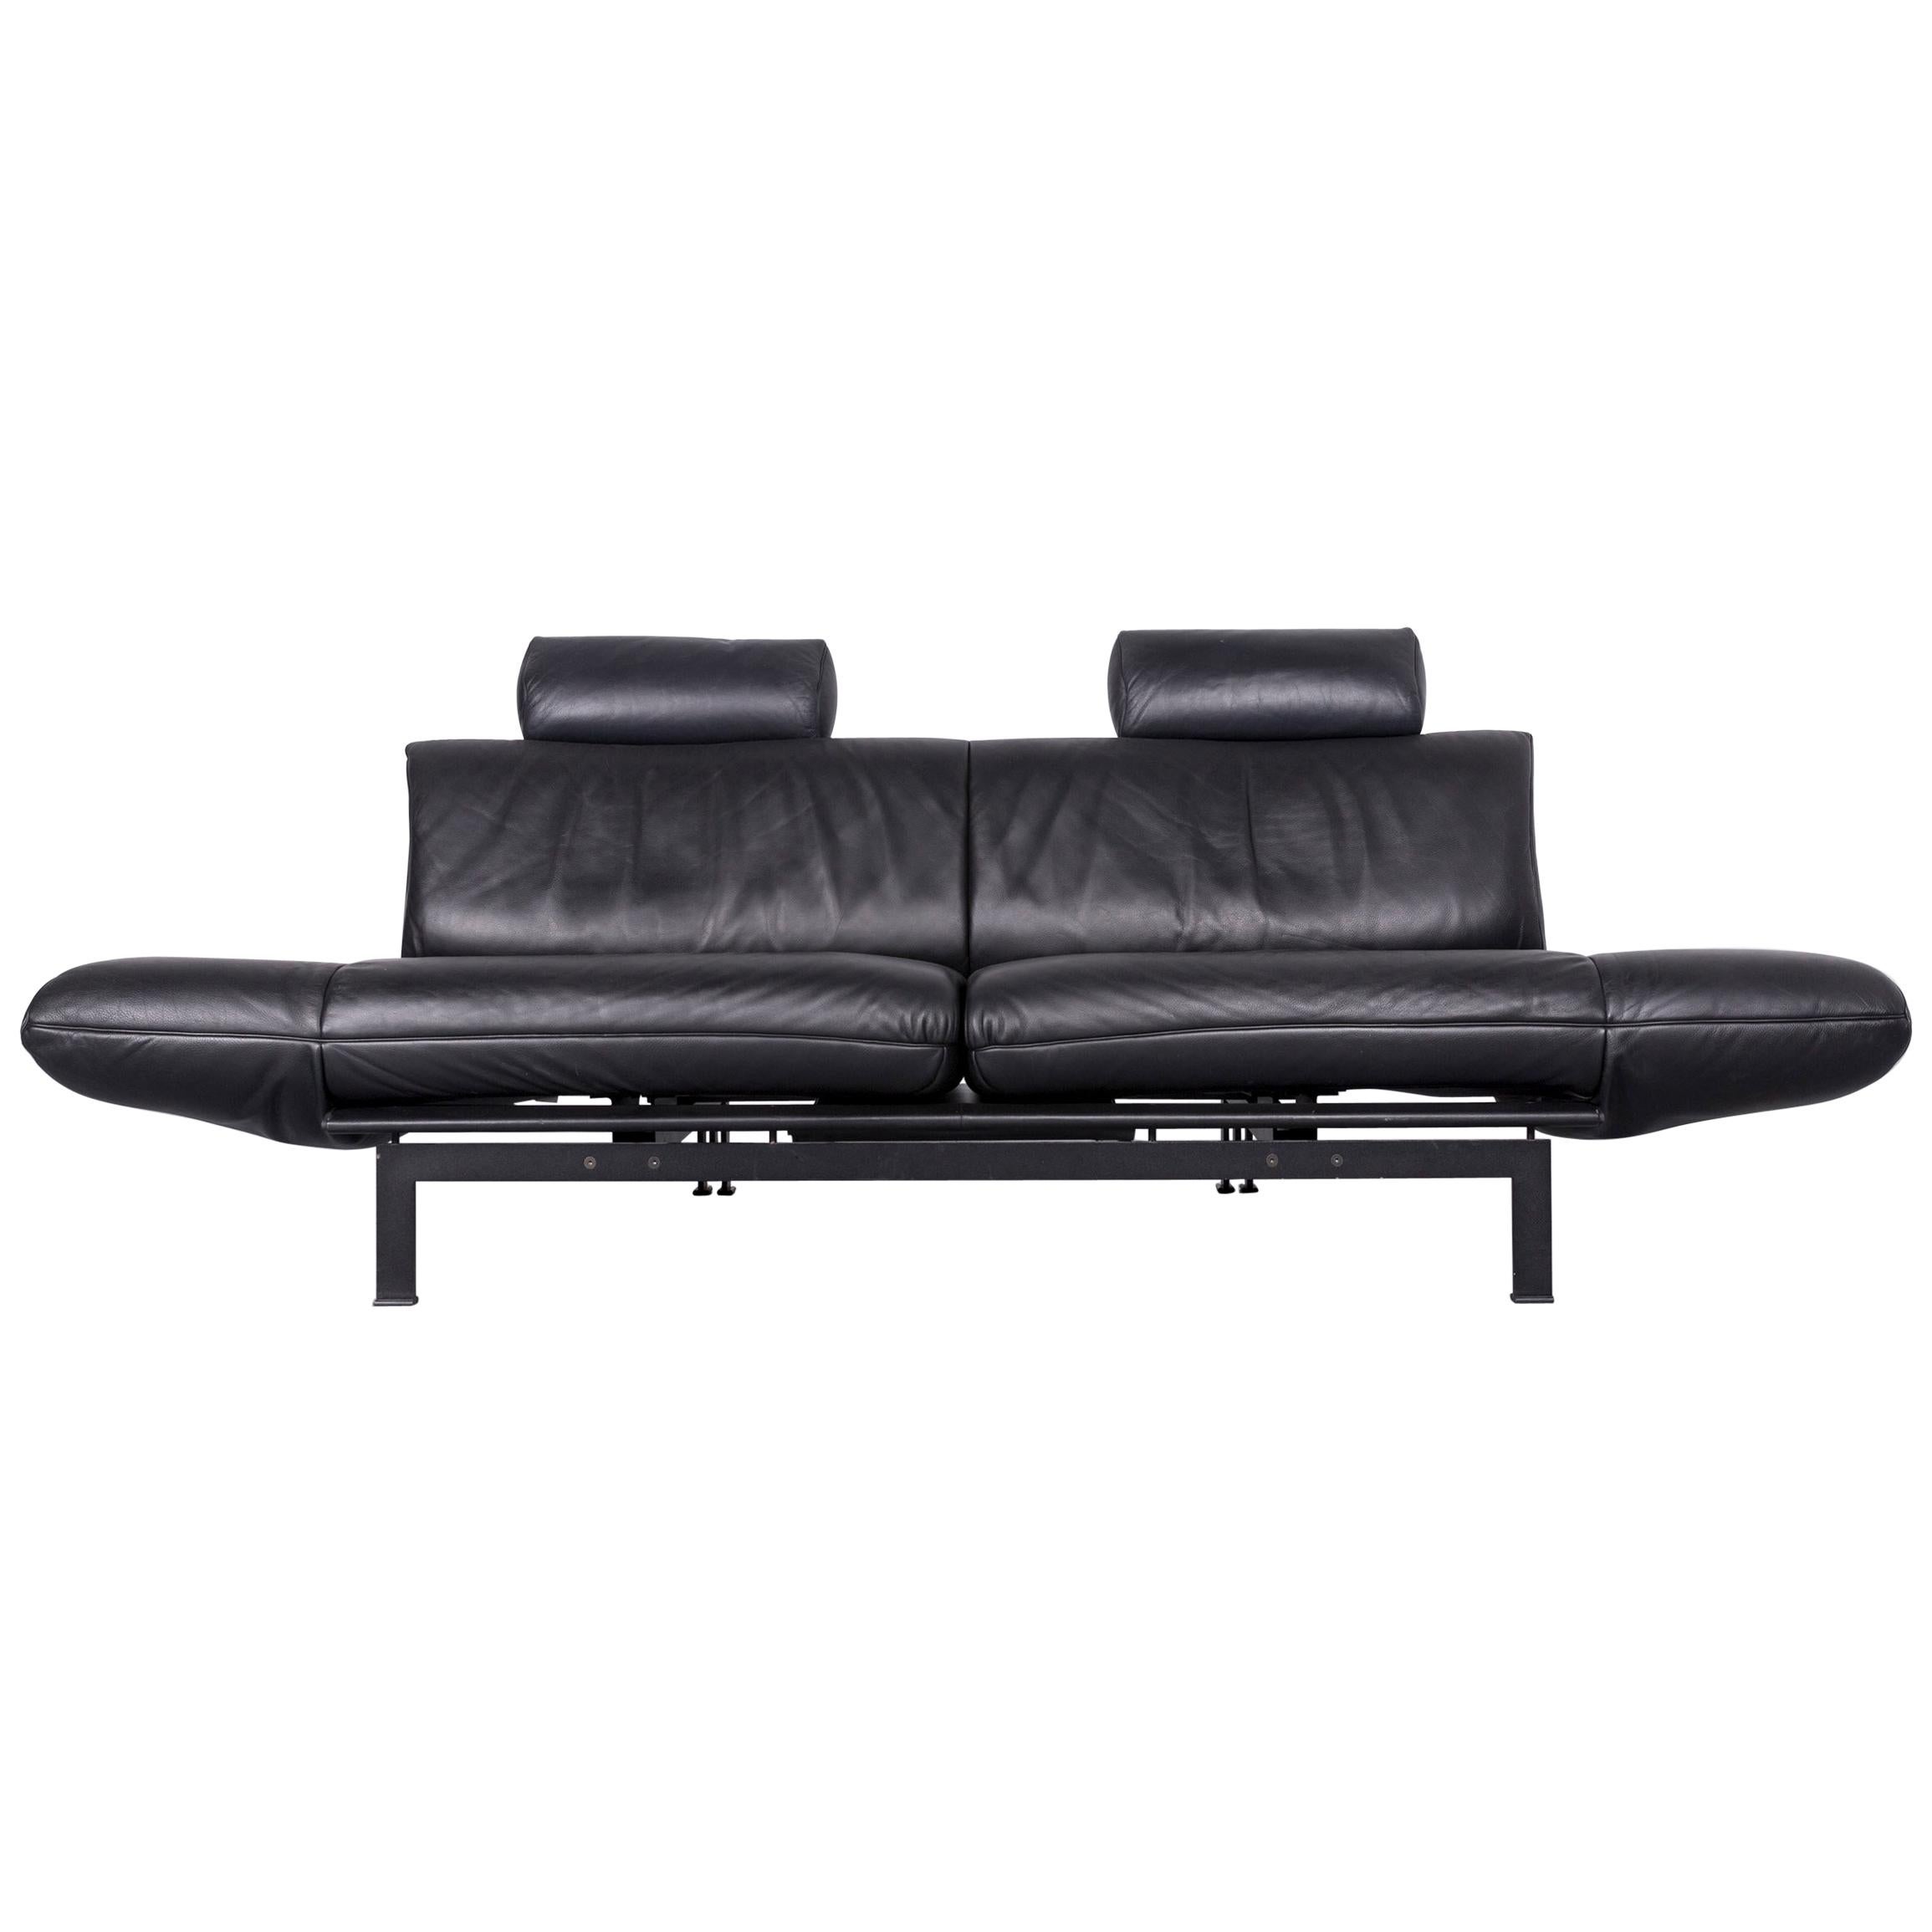 De Sede Ds 140 Designer Leather Sofa Black Three-Seat Function Modern For Sale